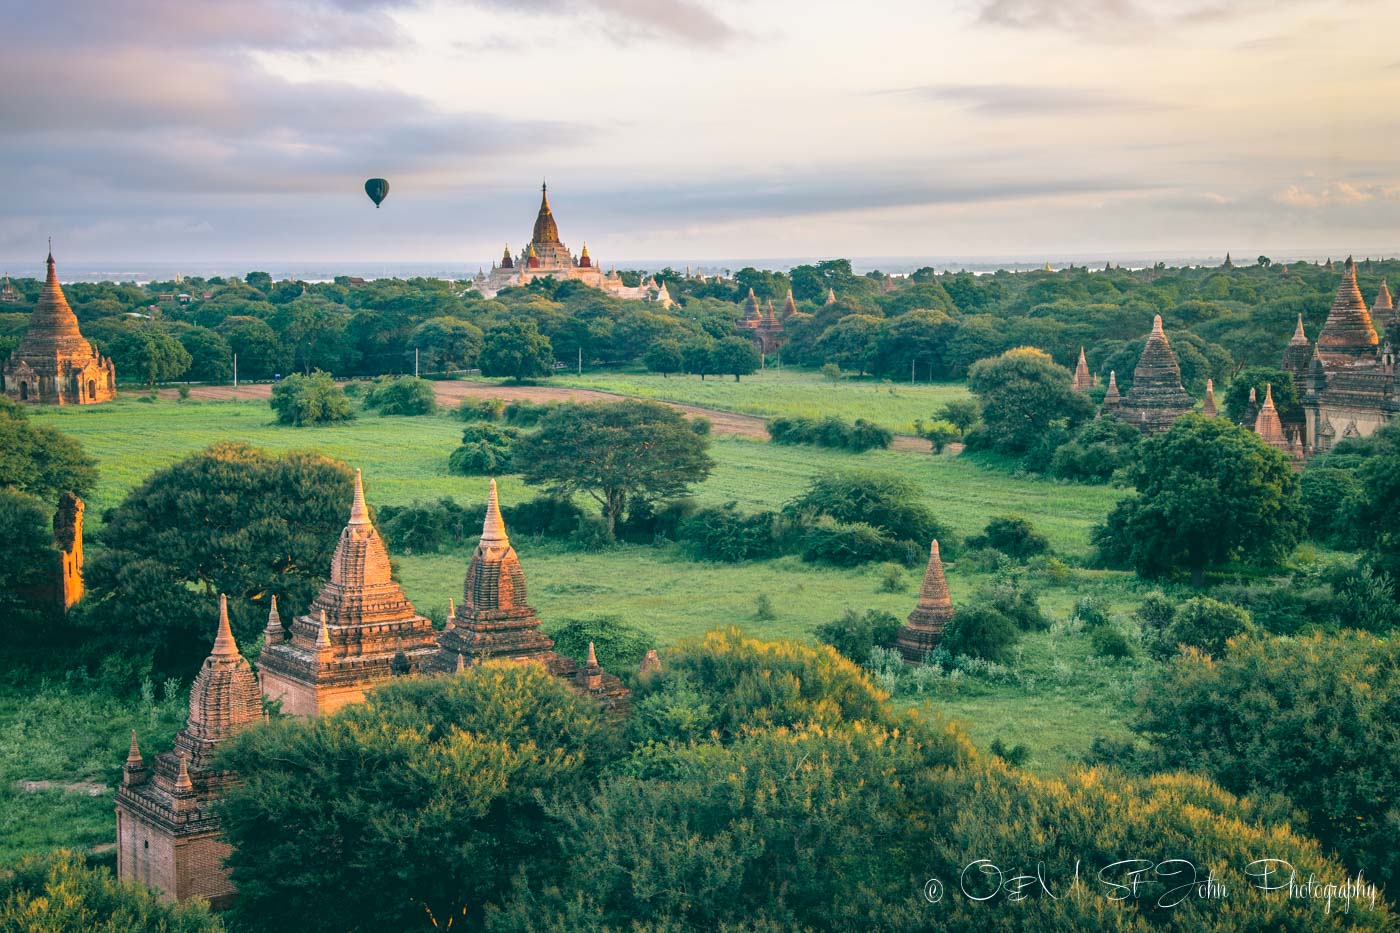 Myanmar travel: Hot air balloon flies over Bagan. Myanmar